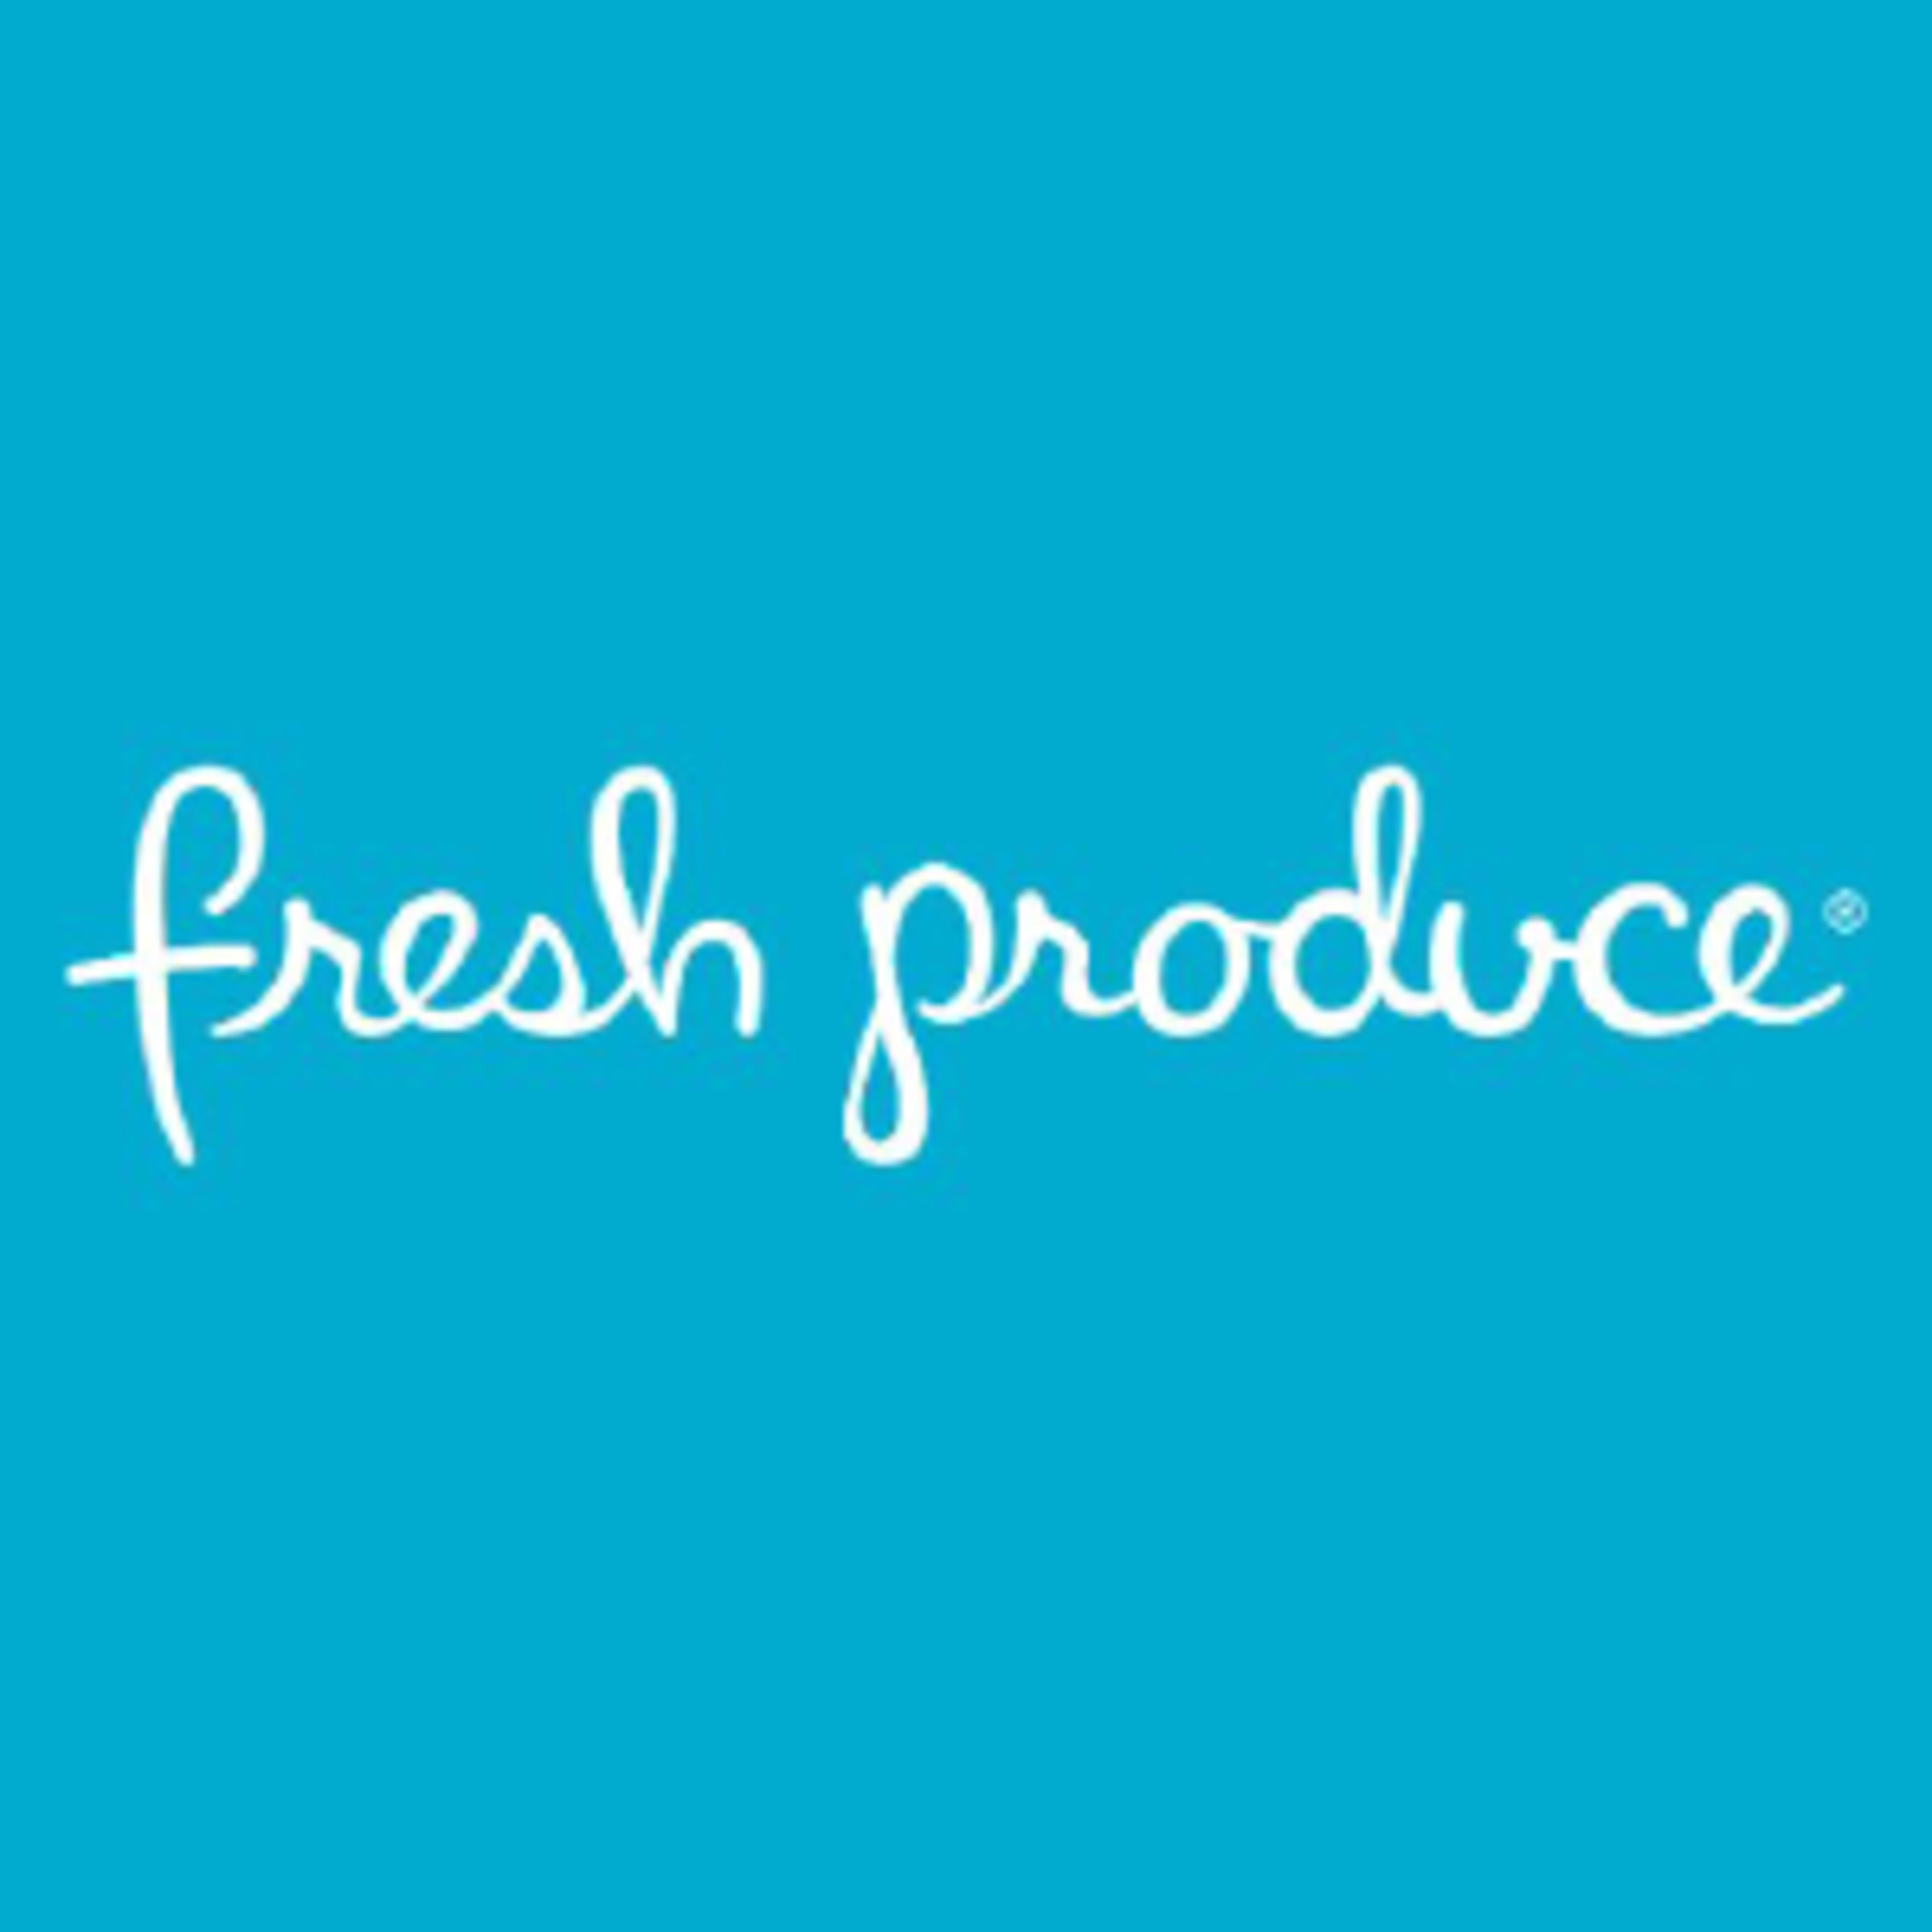 Fresh Produce Code